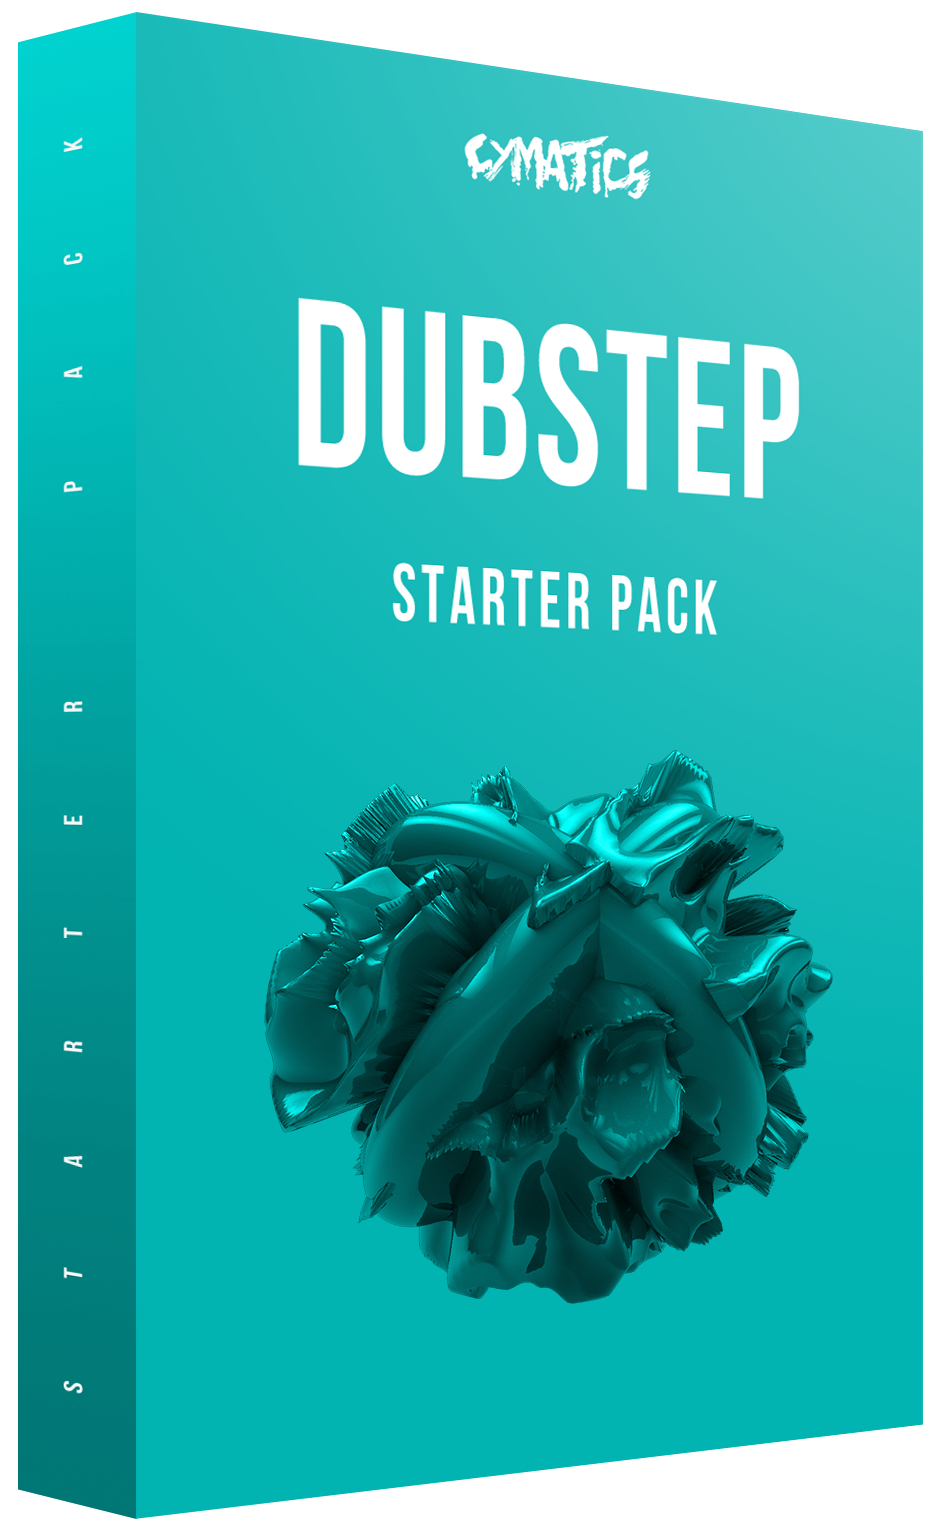 Dubstep sample packs